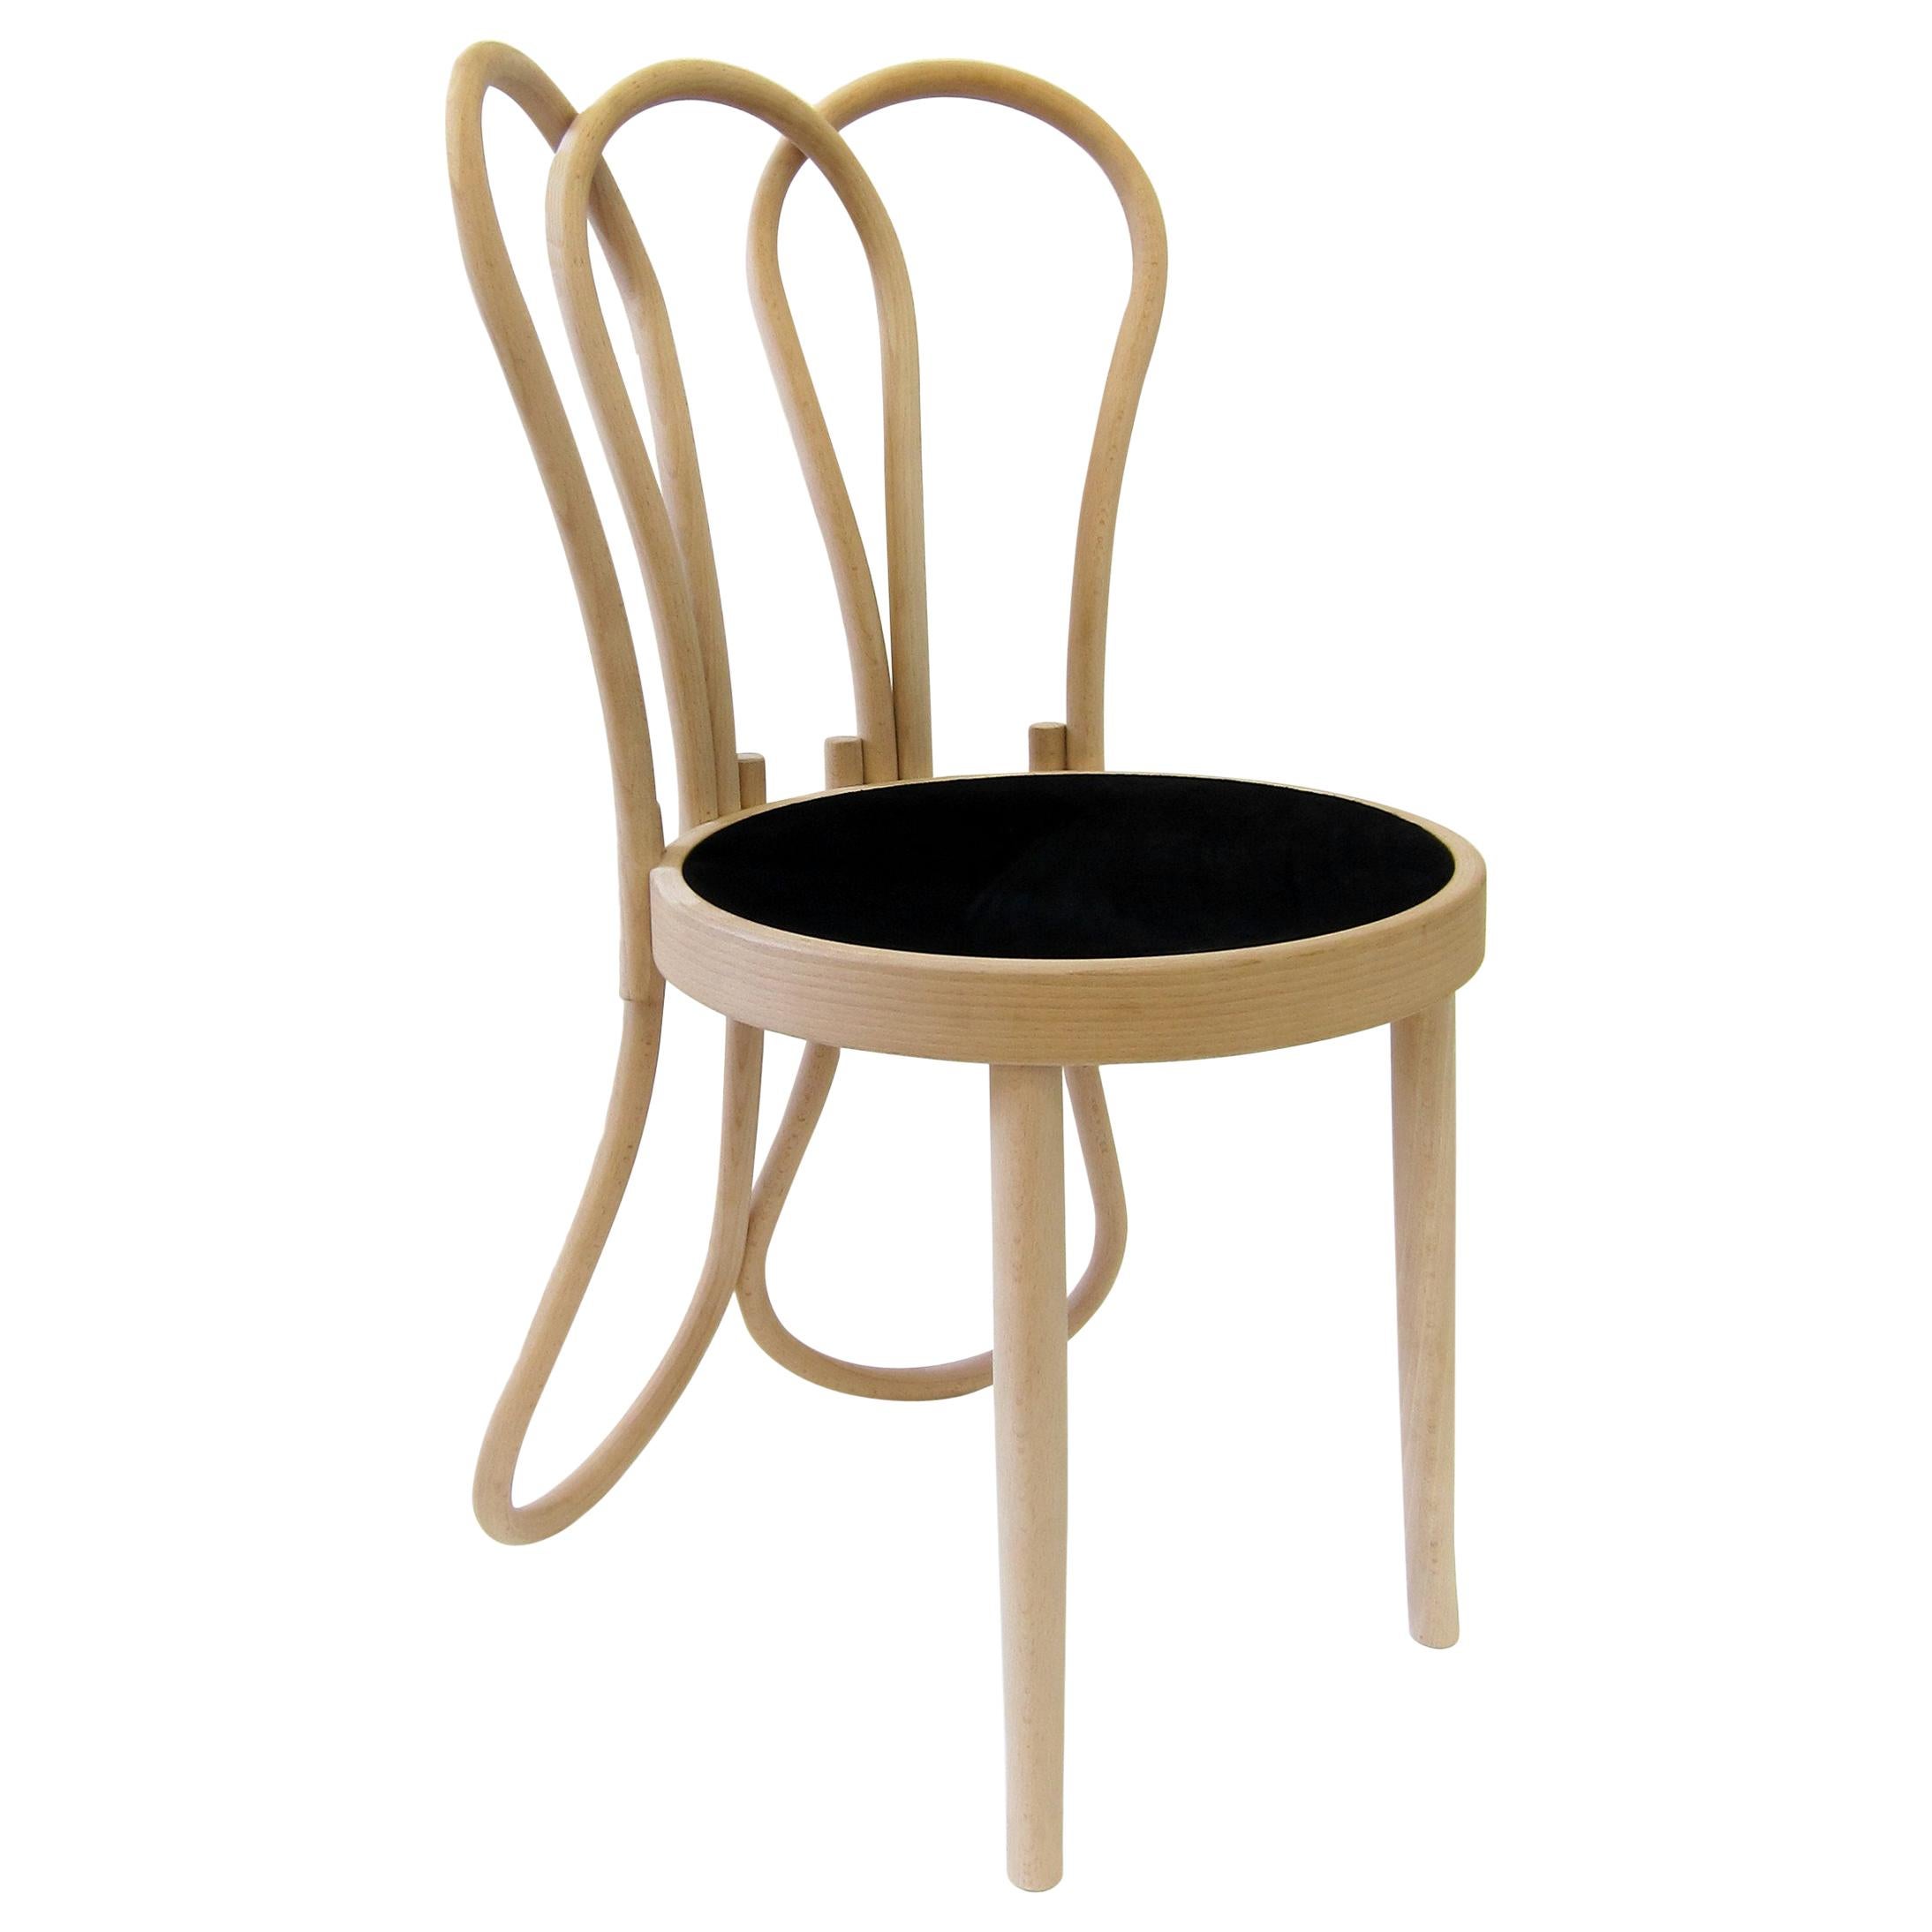 Gebrüder Thonet Vienna GmbH Post Mundus Chair in Beech and Upholstered Seat